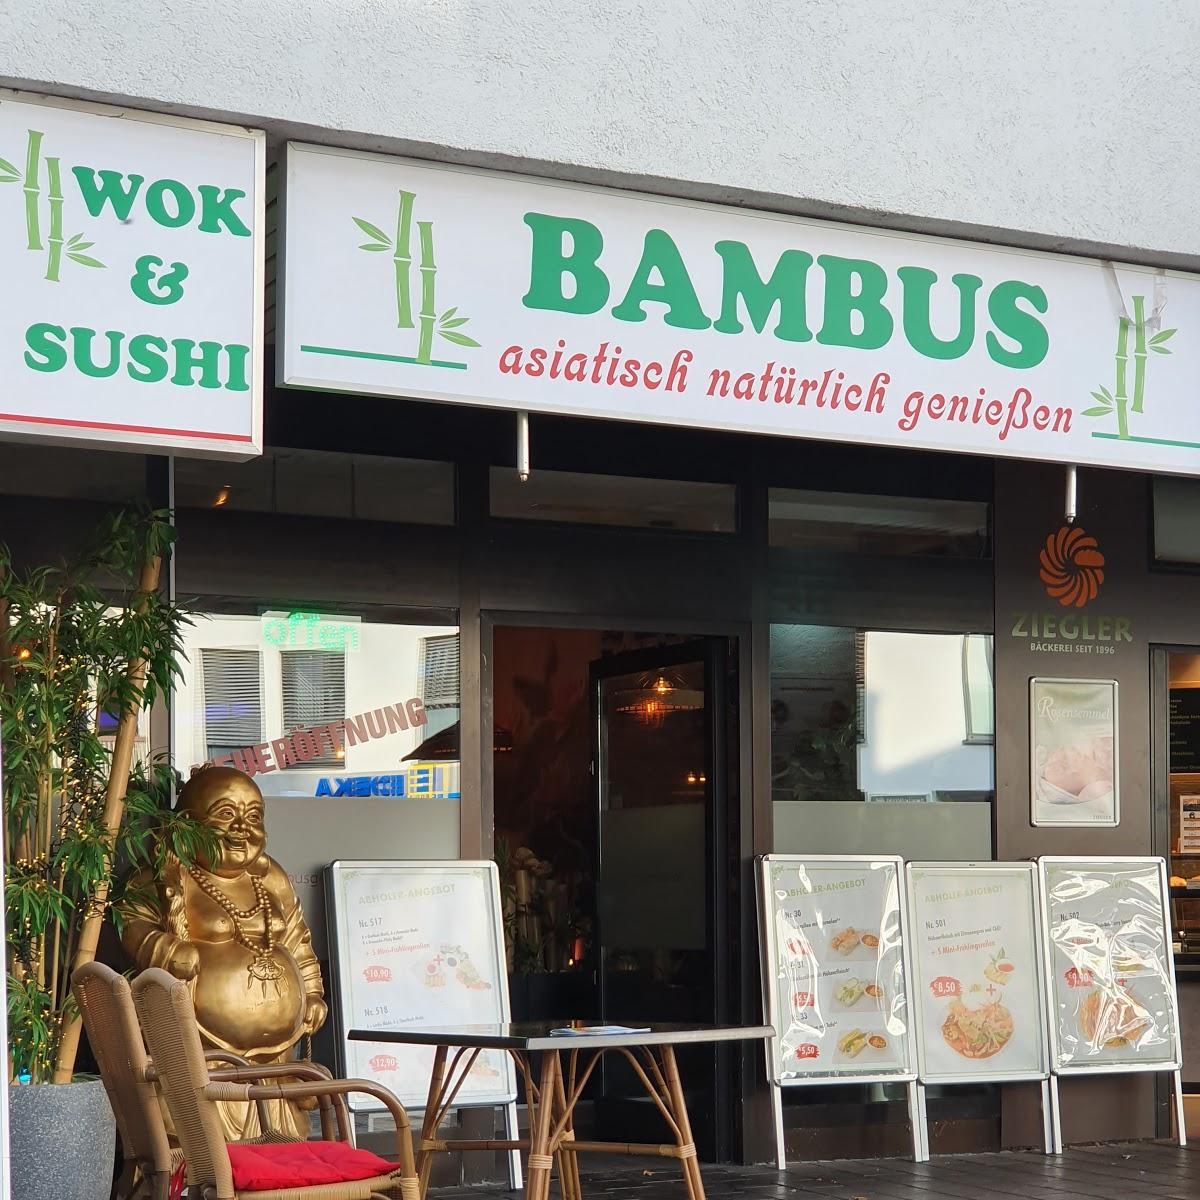 Restaurant "Bambus" in Gräfelfing